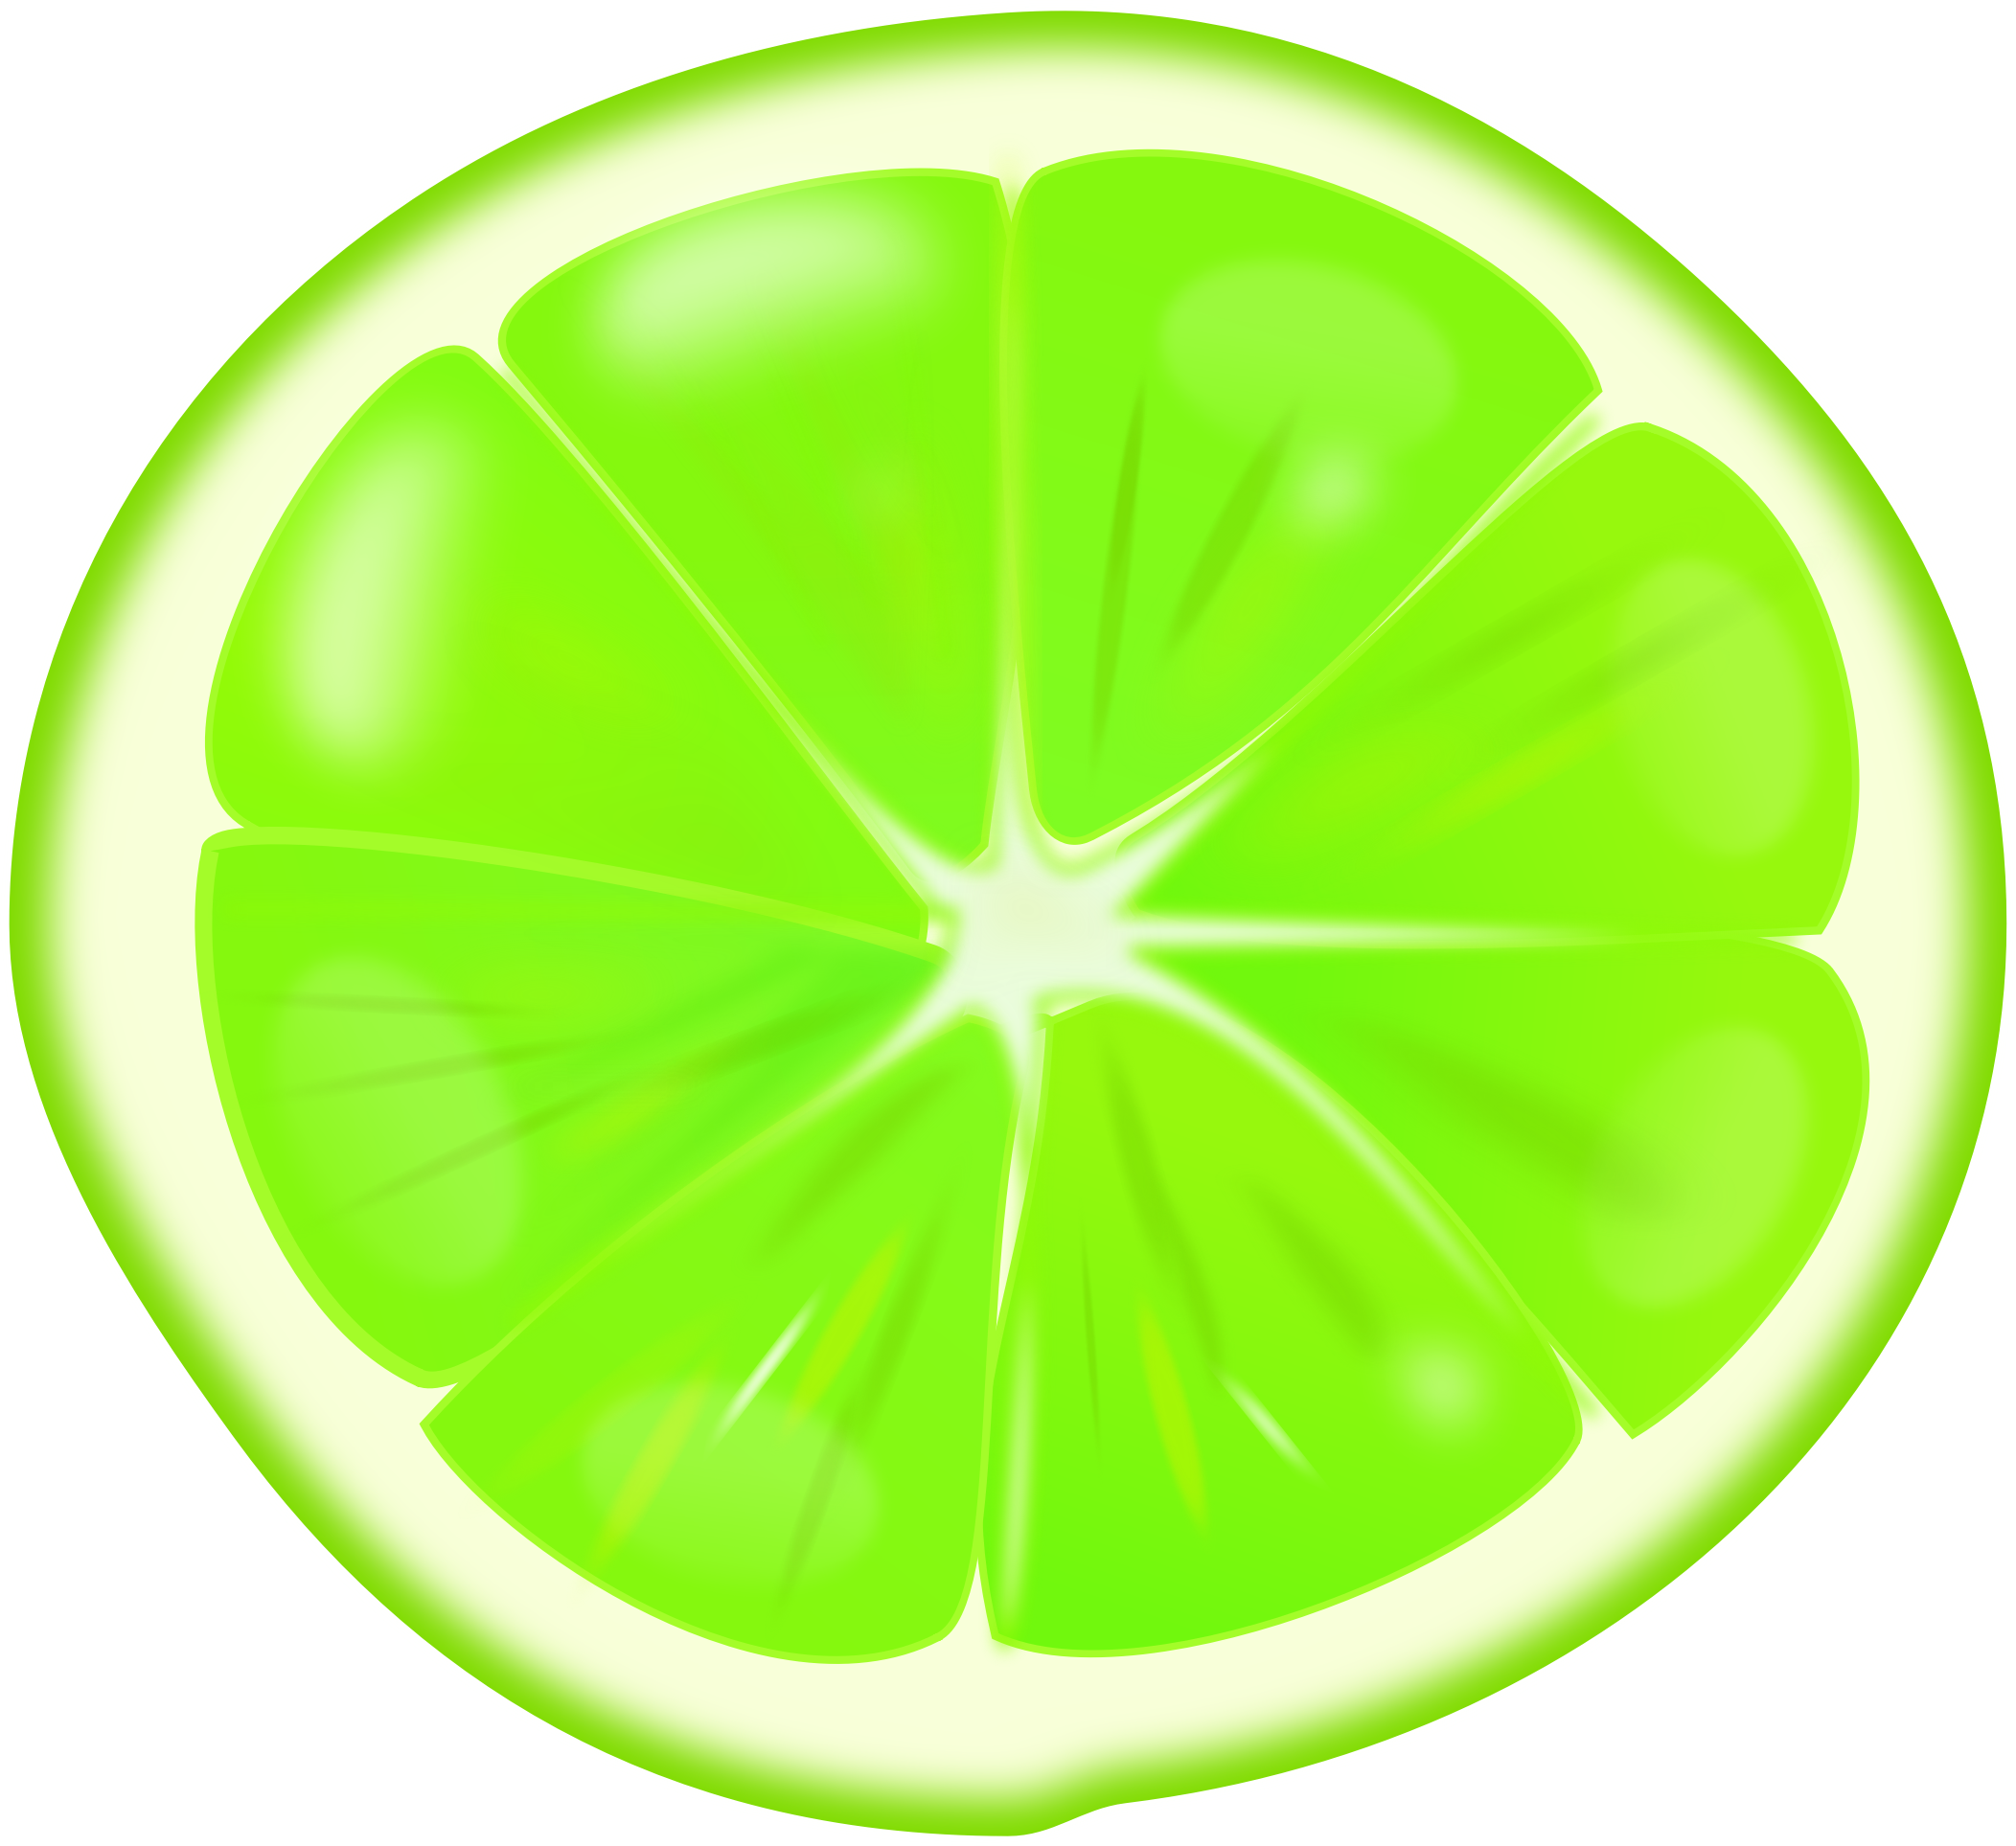 Slice big image png. Lime clipart circle